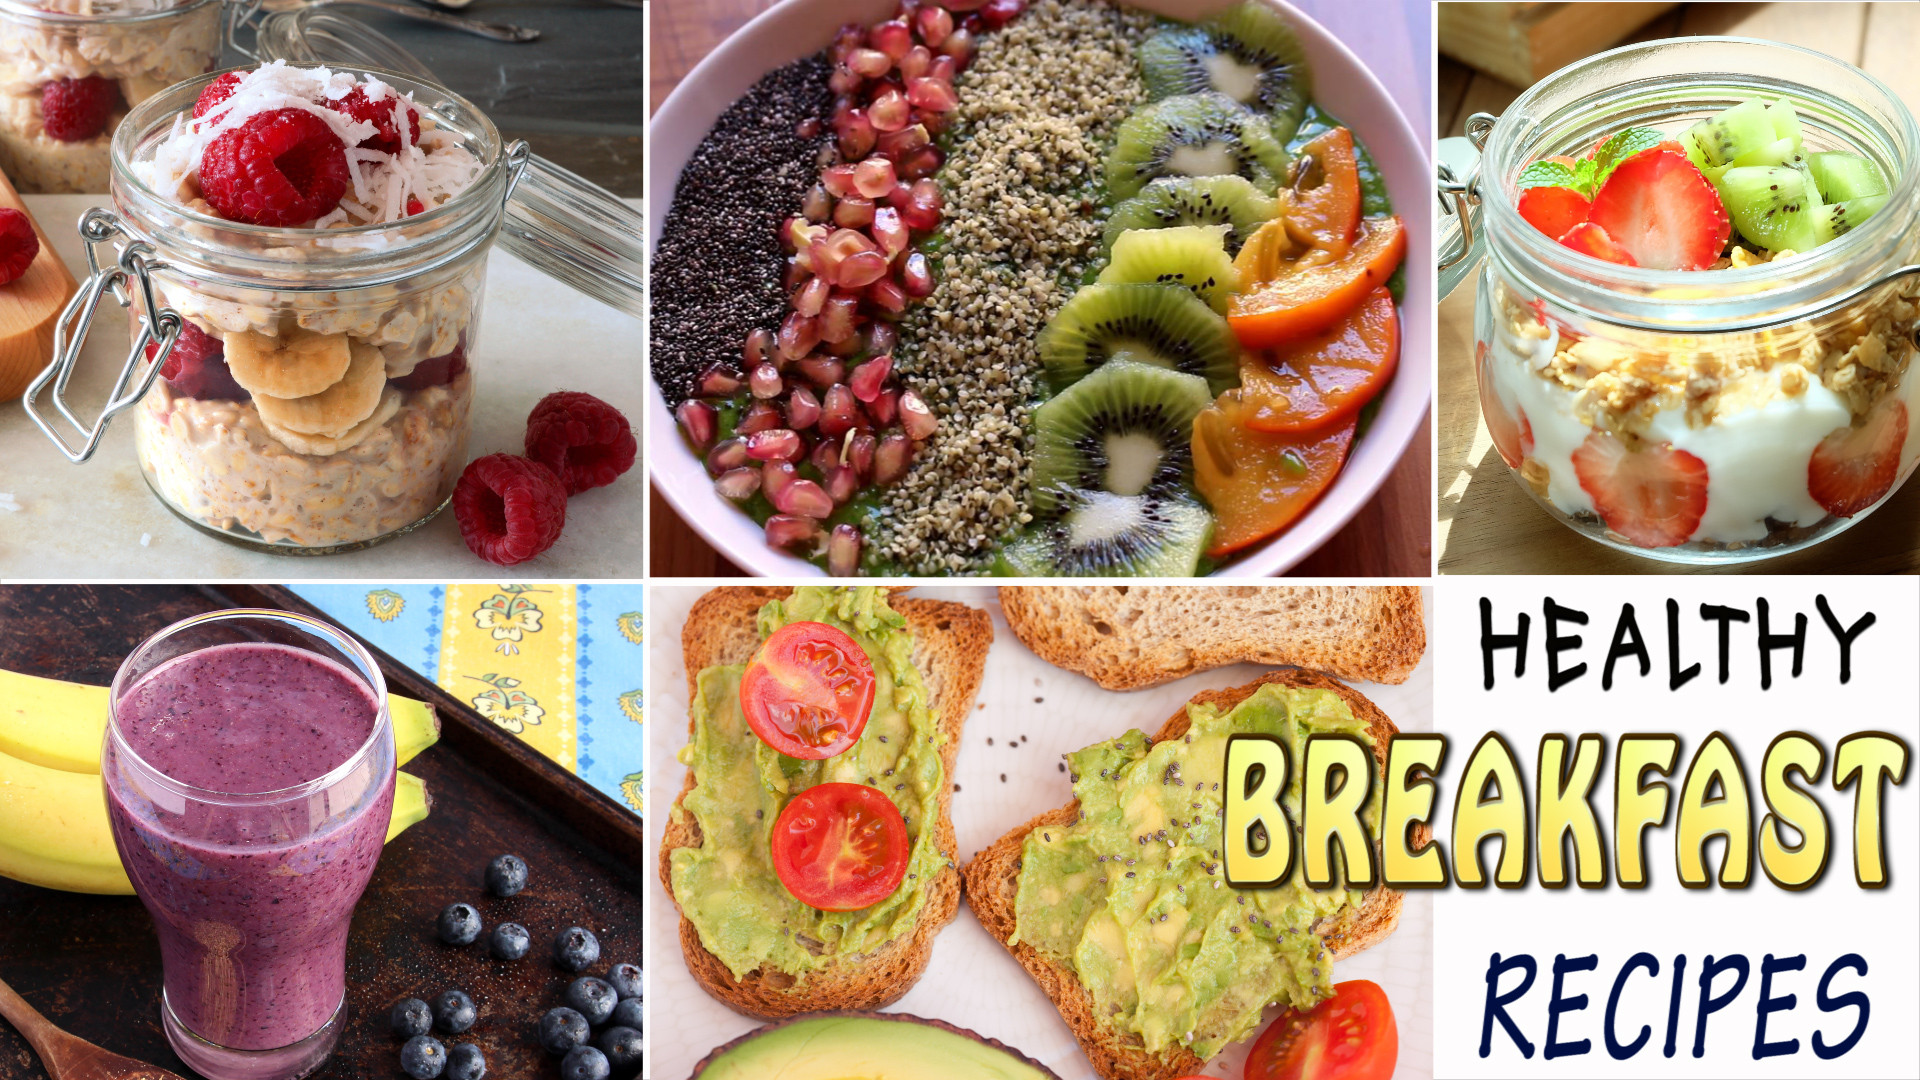 Healthy Vegetarian Breakfast Recipes
 My 8 Favorite Healthy Vegan Breakfast Recipes